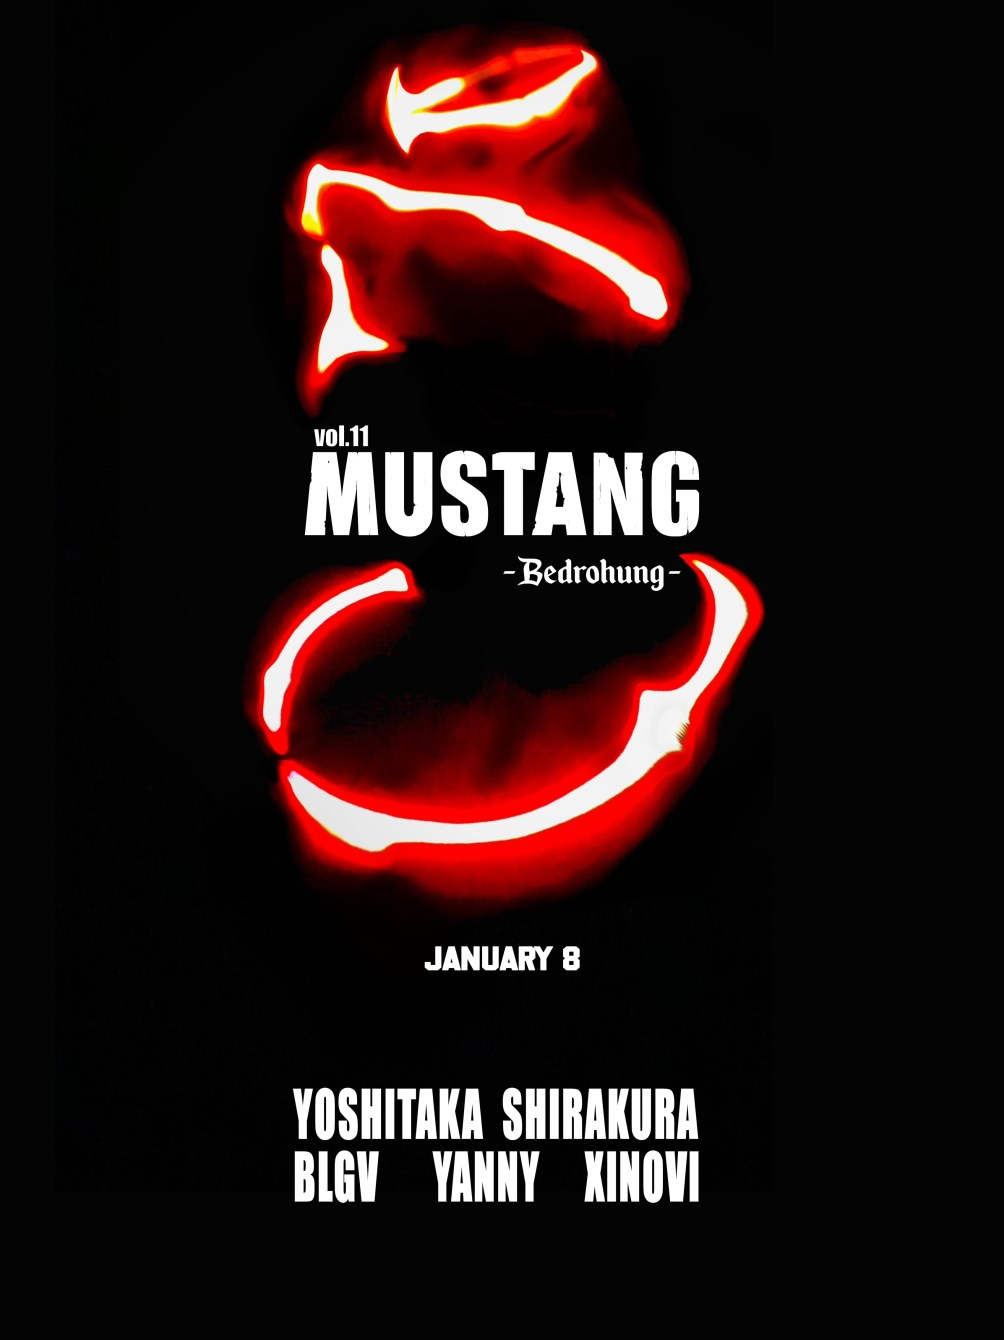 Mustang vol.11 -Bedrohung- - Flyer front